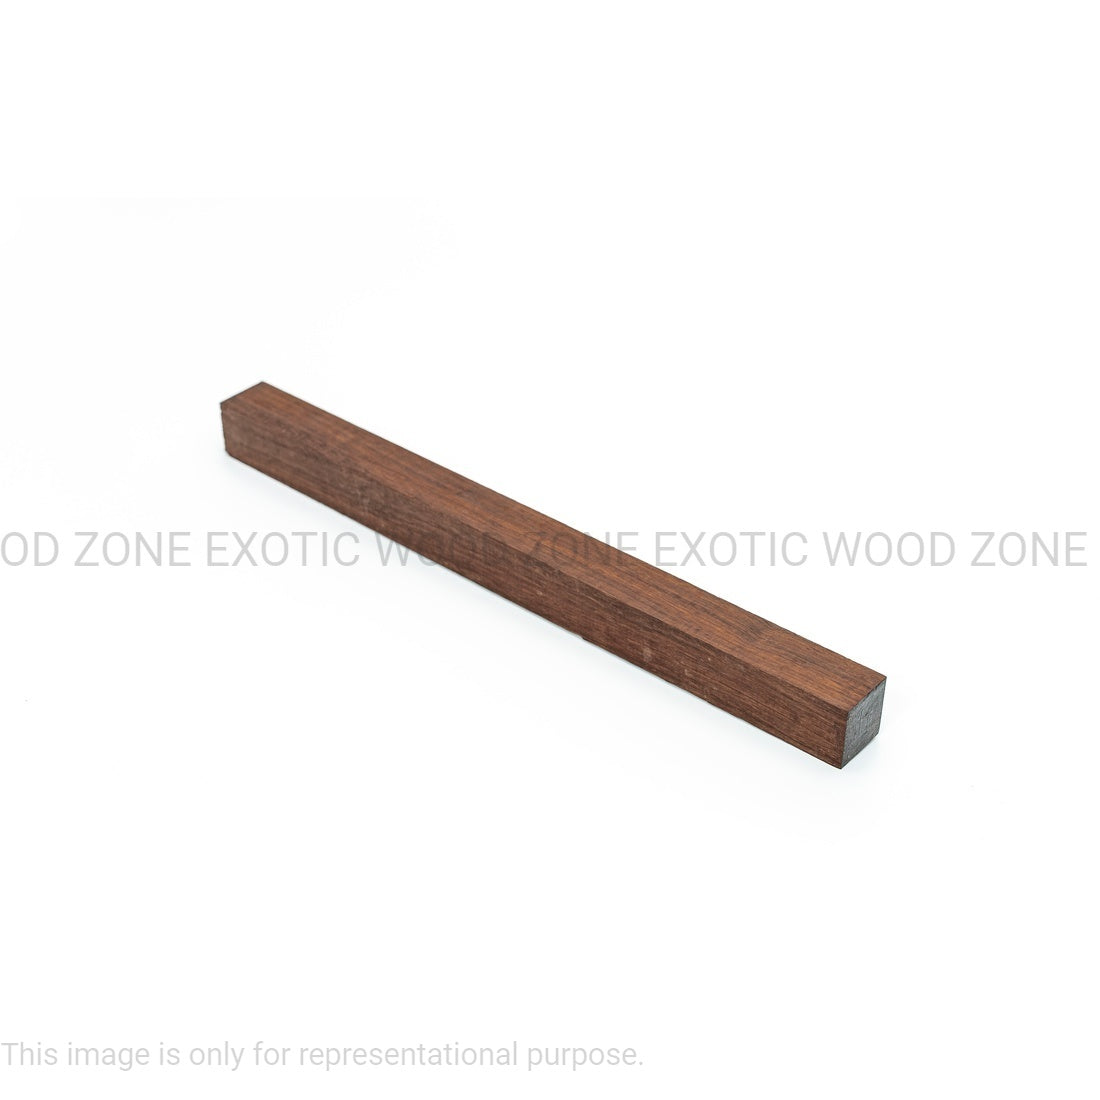 Granadillo Hobby Wood/ Turning Wood Blanks 1 x 1 x 12 pulgadas